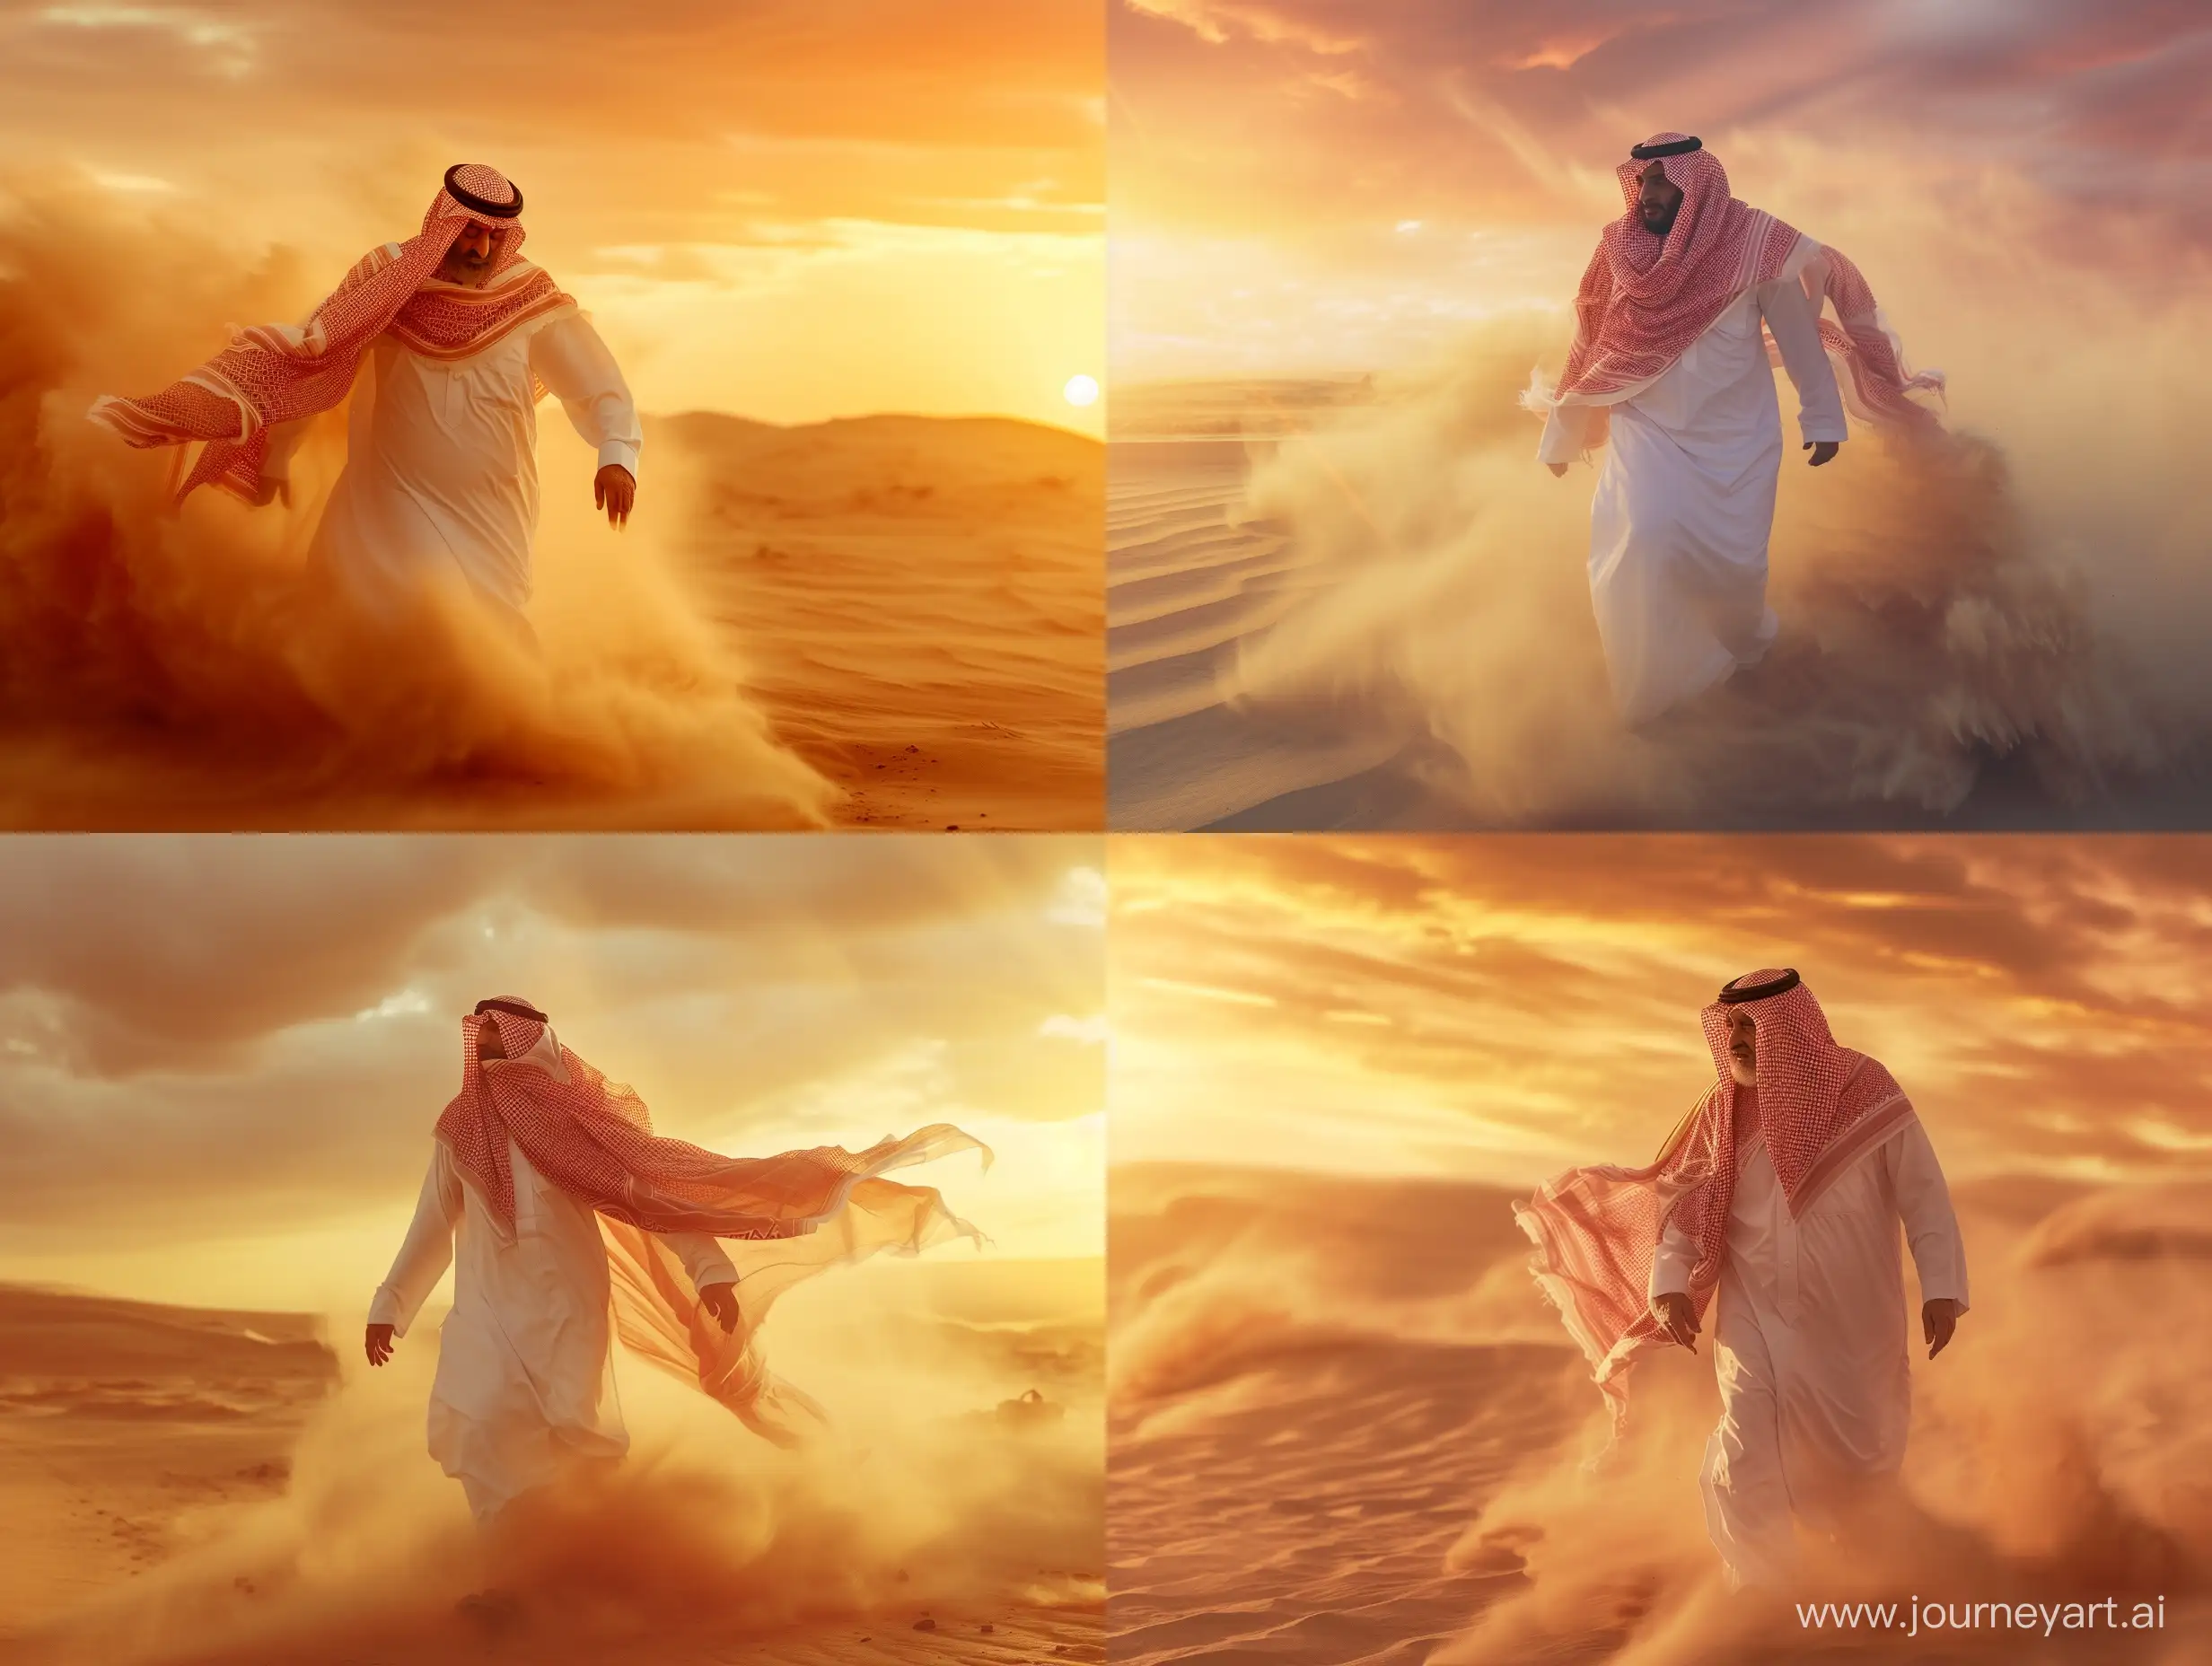 Elegant-Saudi-Prince-Vanishing-in-Desert-Sandstorm-at-Sunset